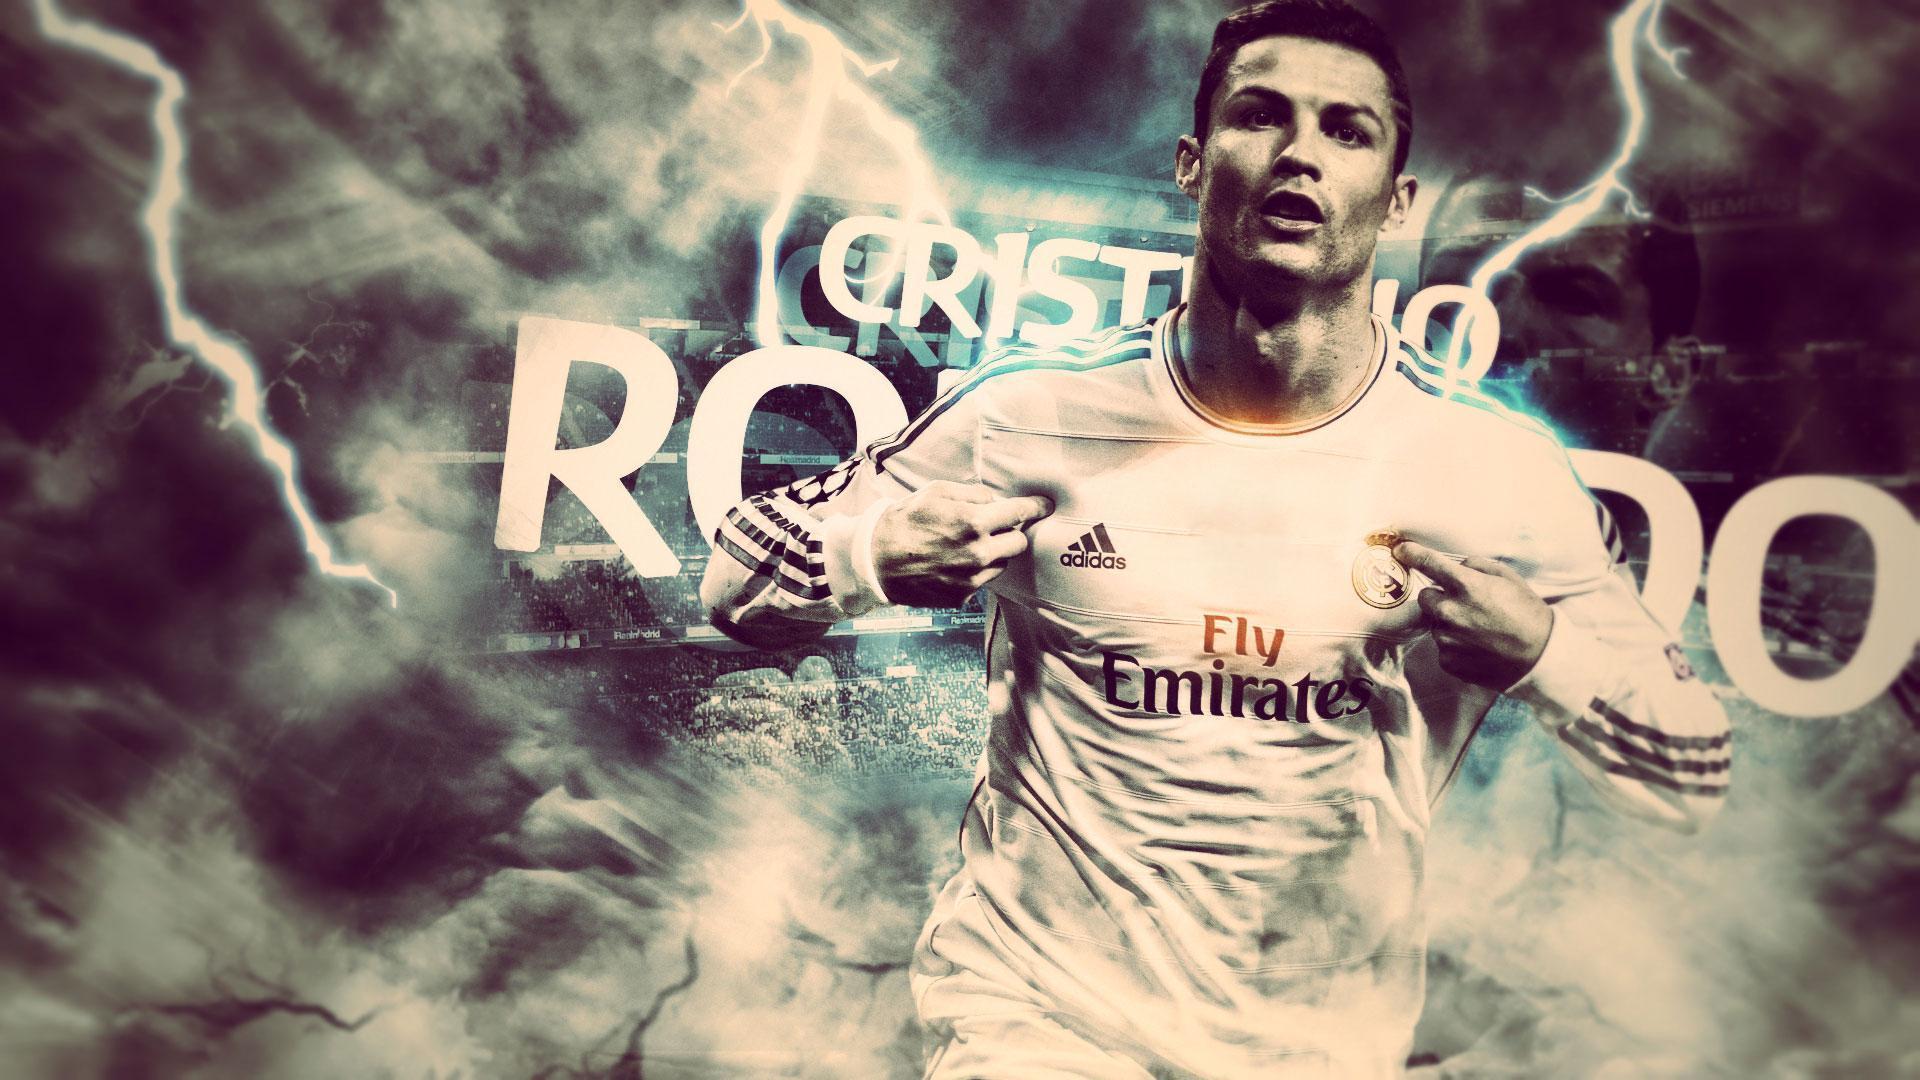 C Ronaldo Wallpaper